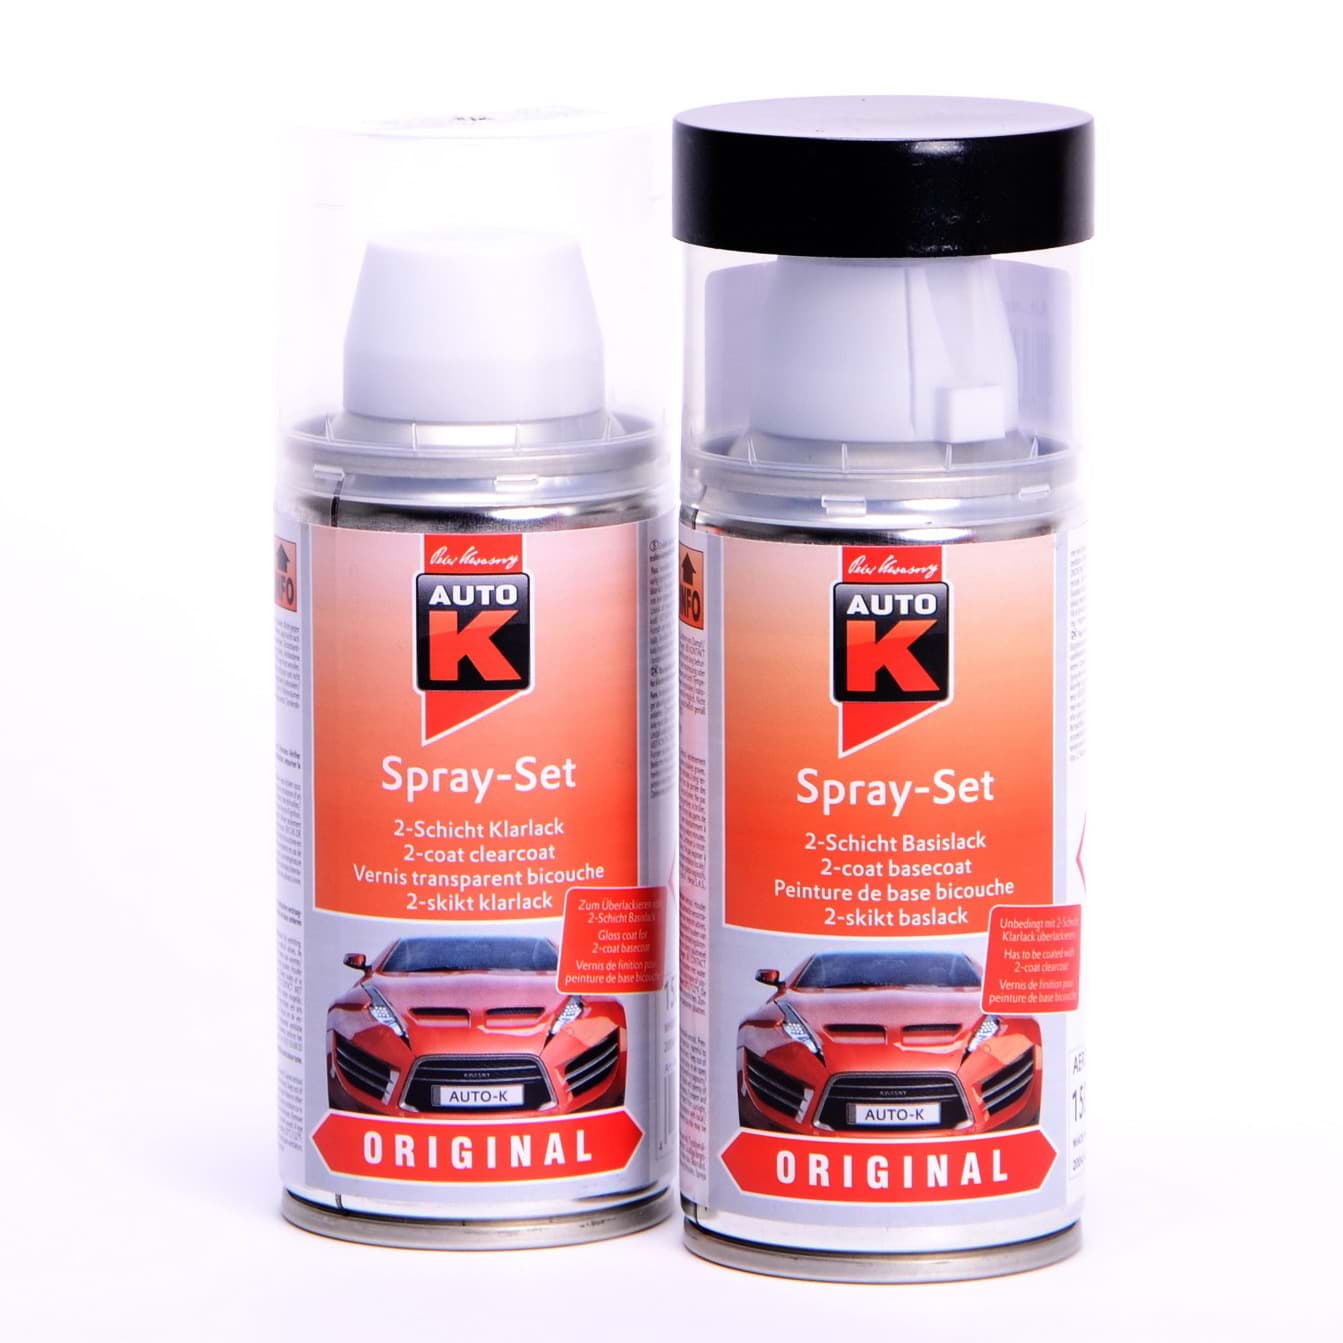 Auto-K Spray-Set Autolack für BMW 252 Calypsorot met 27246 resmi